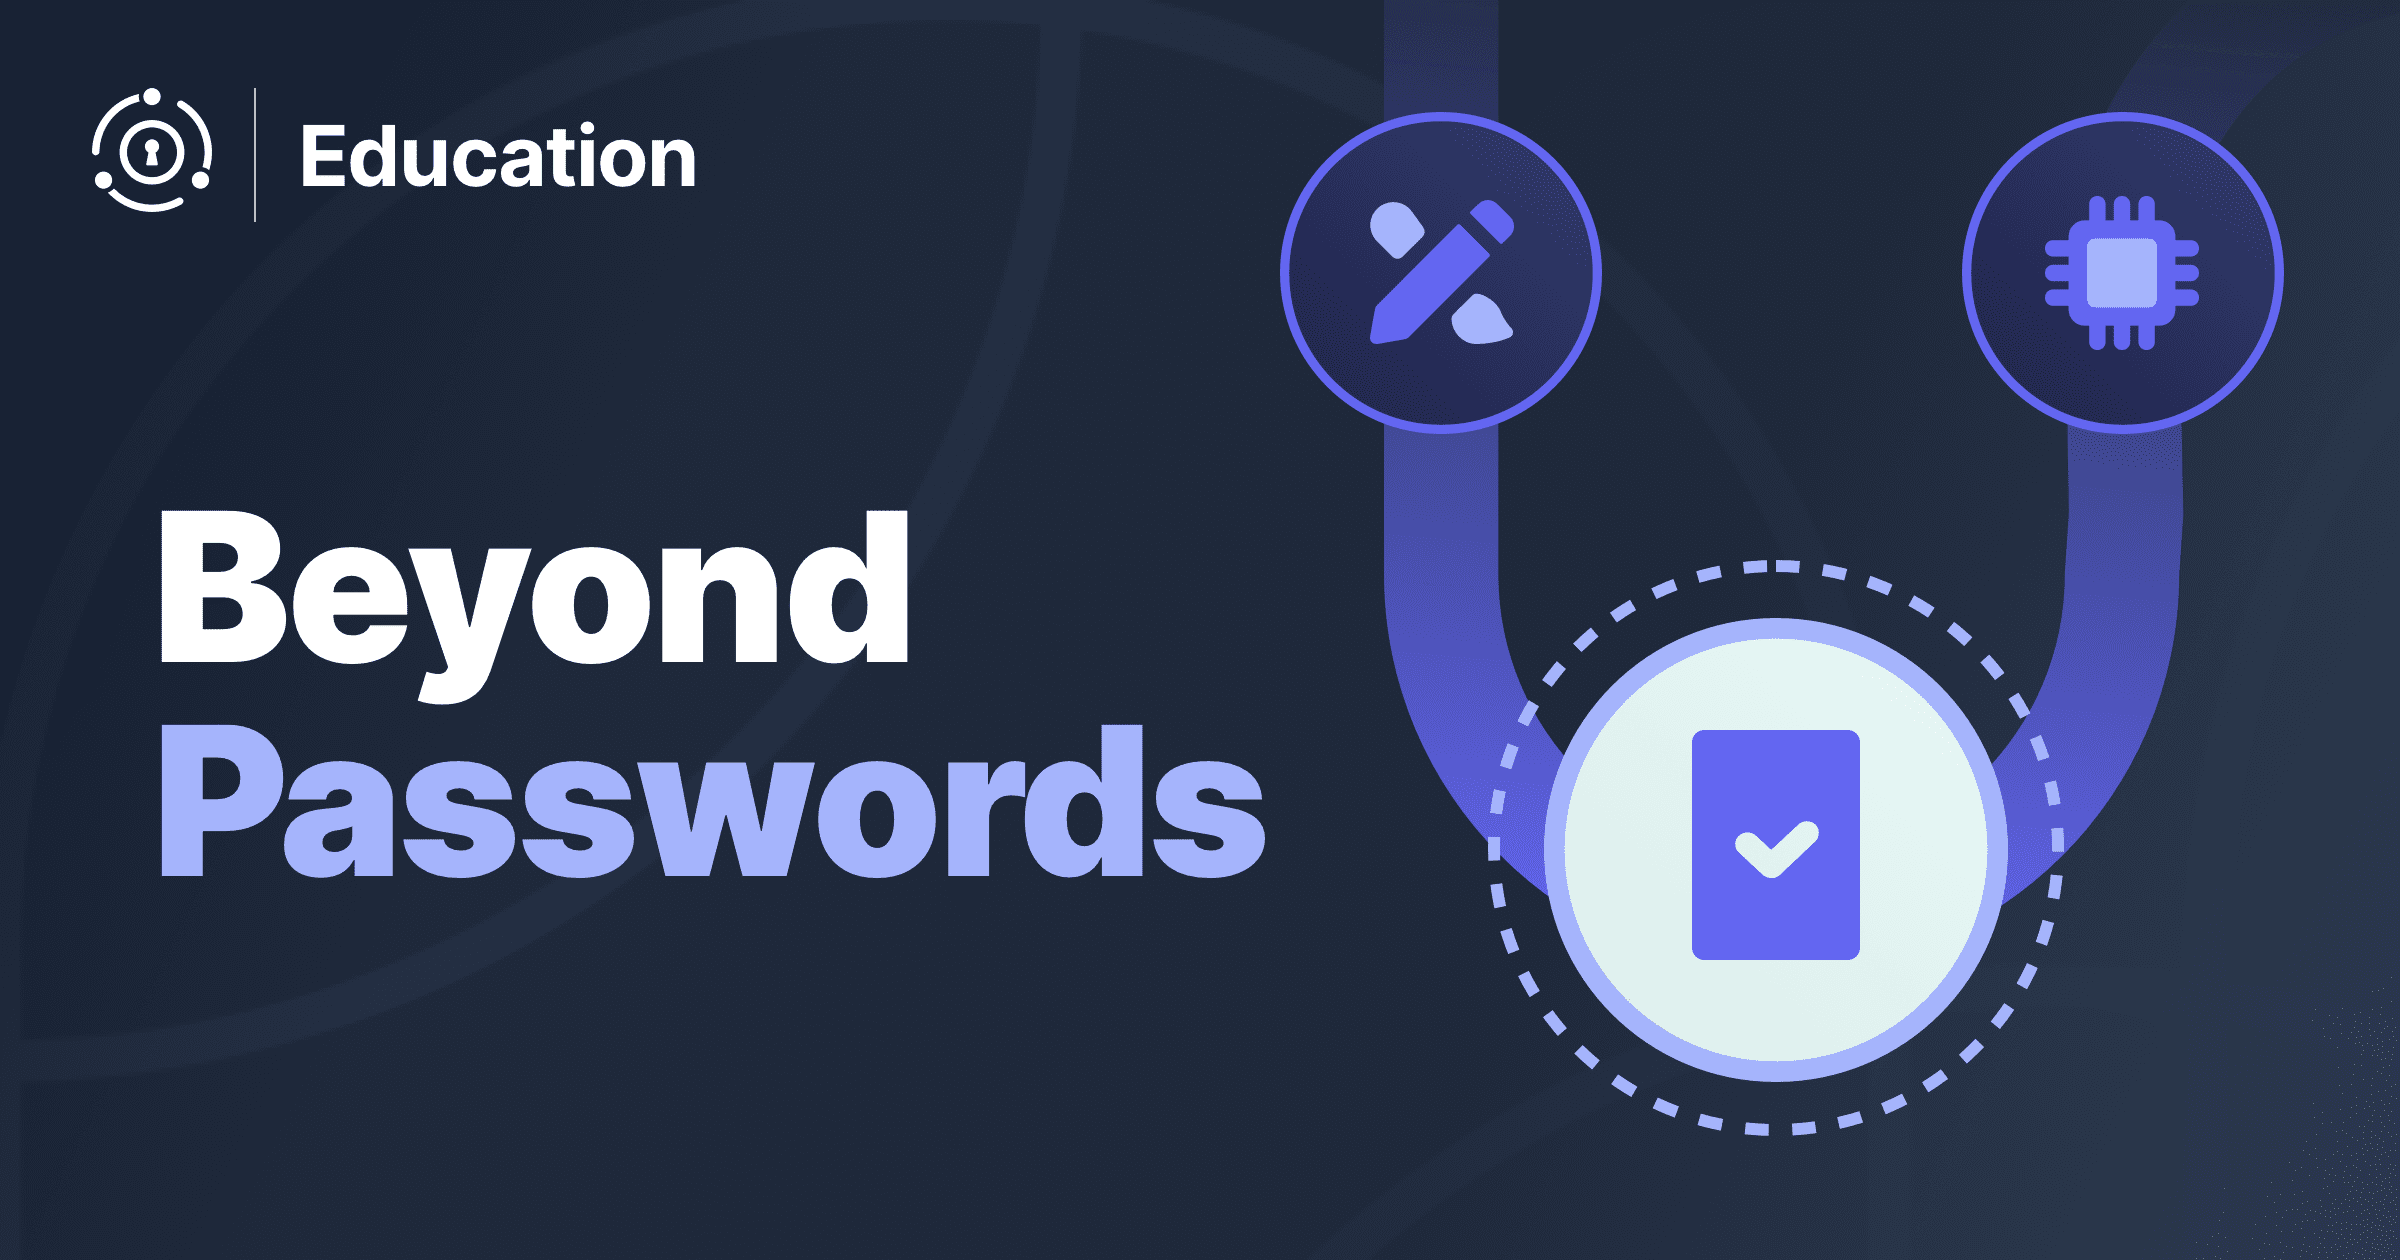 Beyond Passwords - The Evolution of Digital Identity